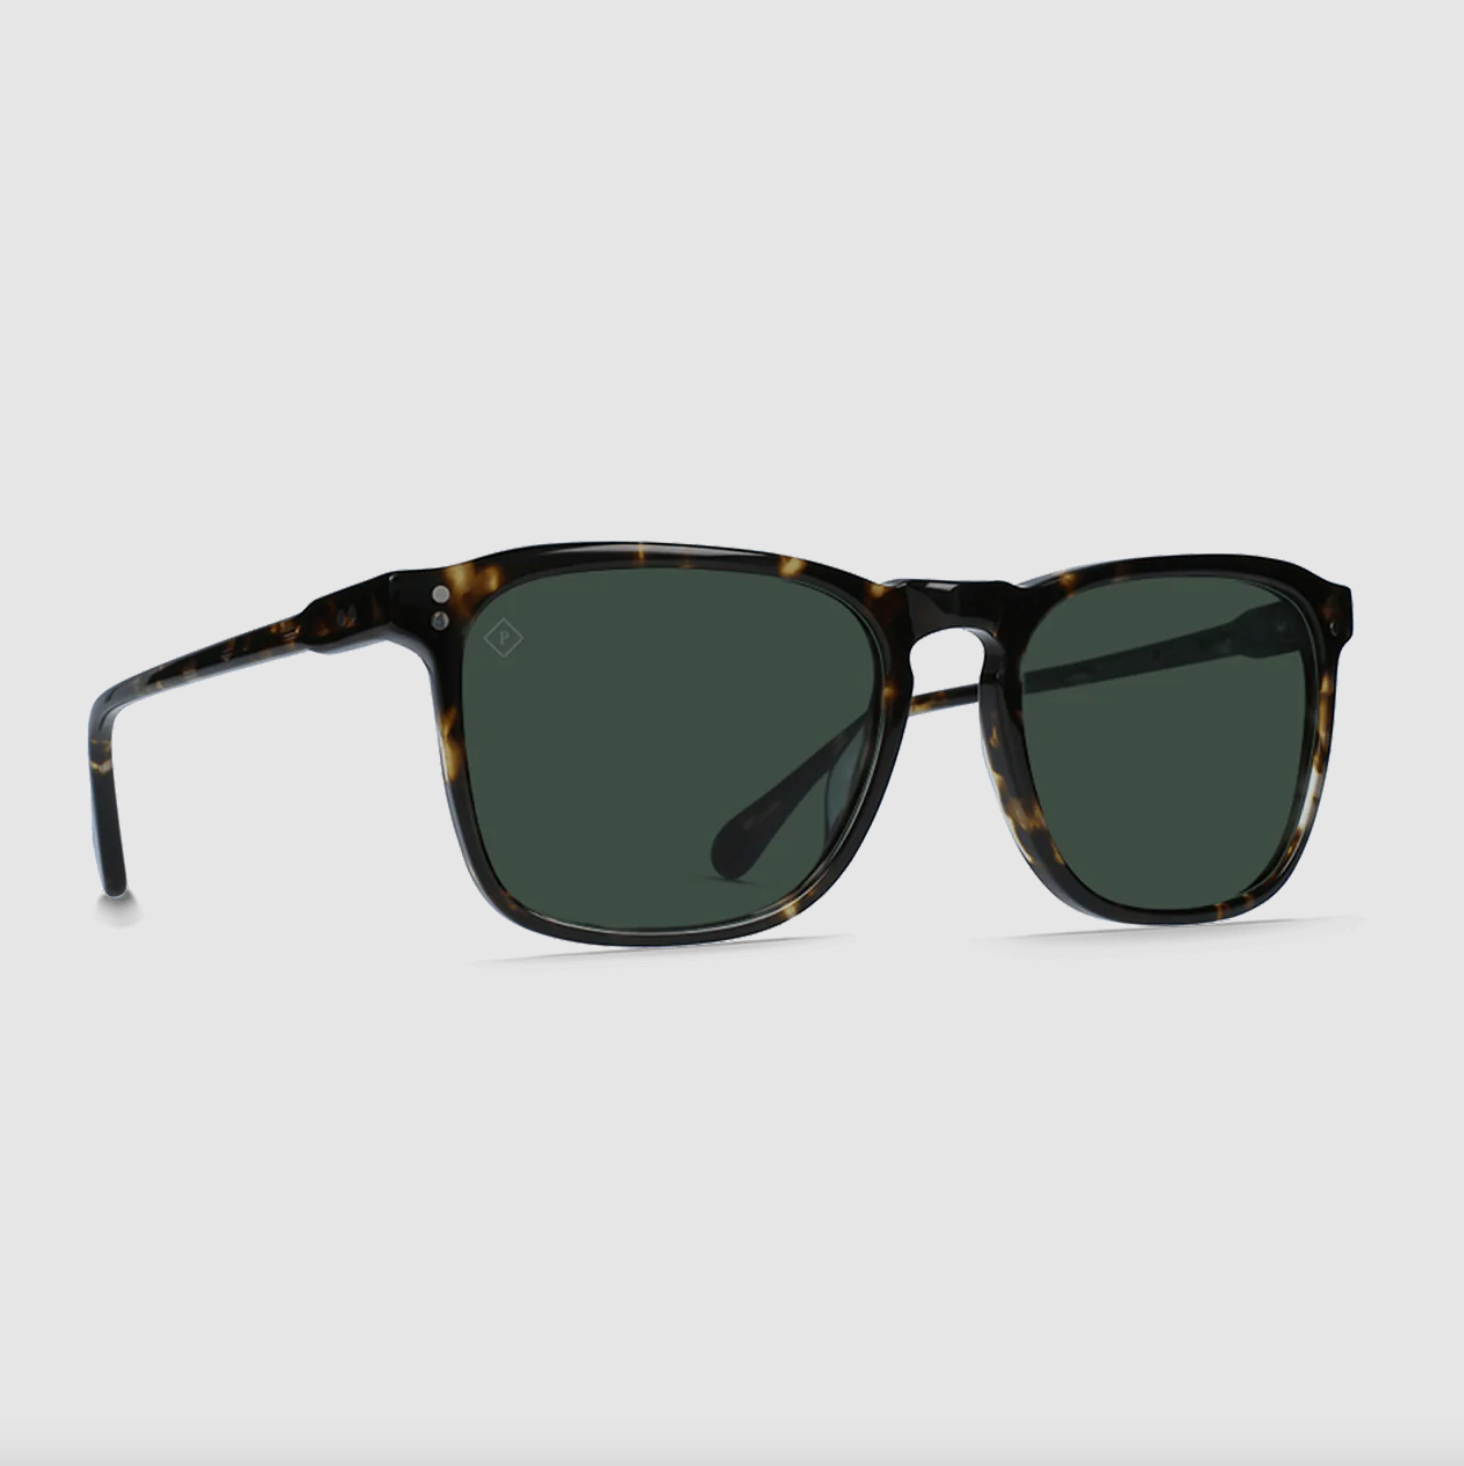 Raen - Wiley Sunglasses - Brindle Tortoise/Green Polarized